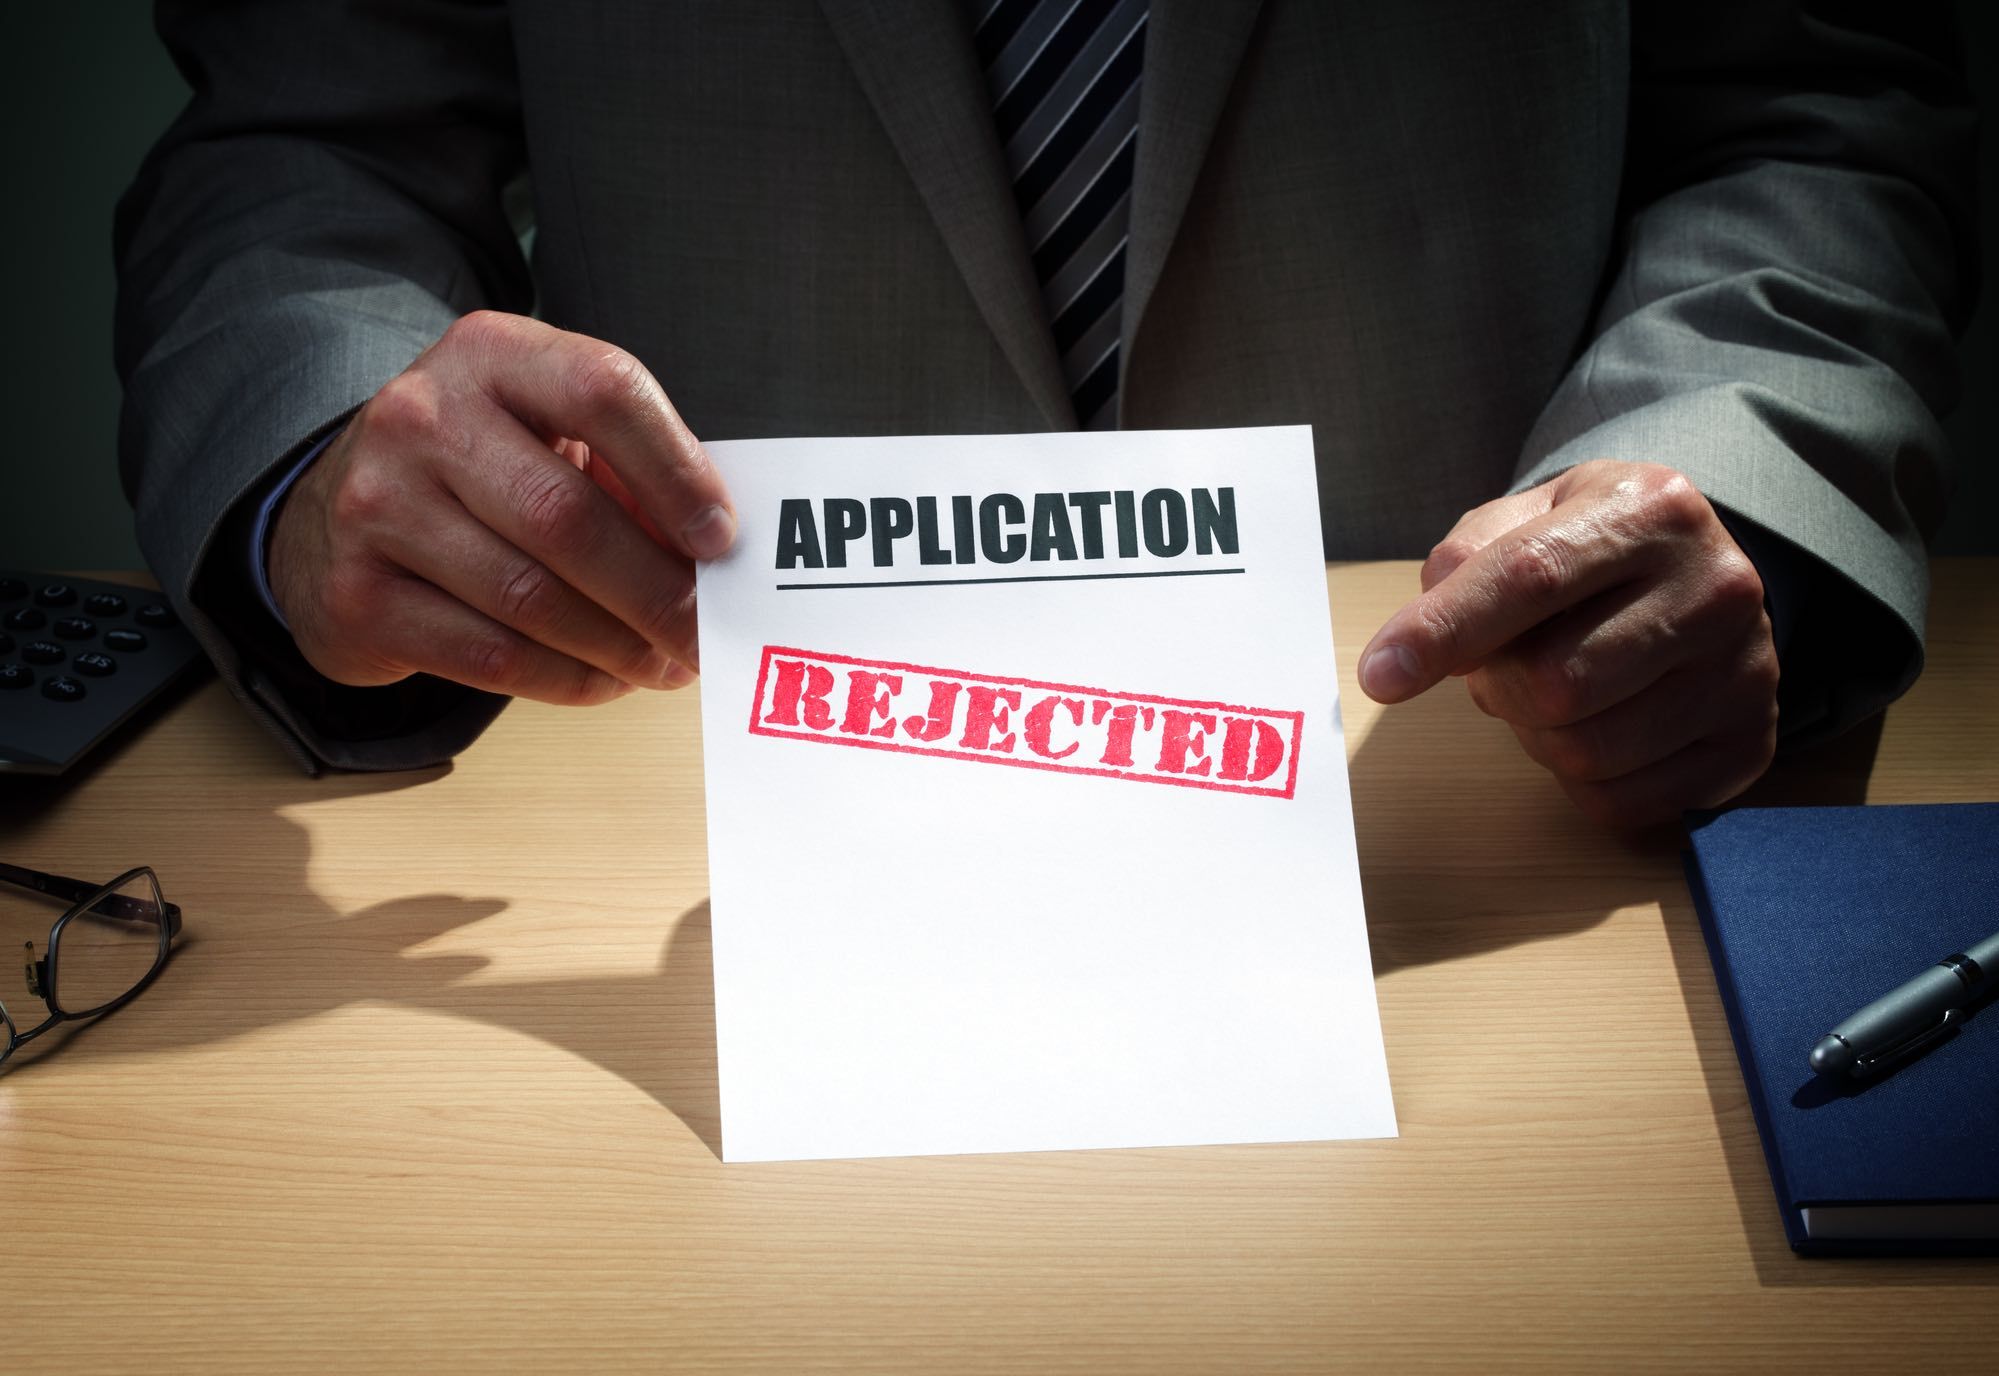 Wells Fargo coronavirus application rejection